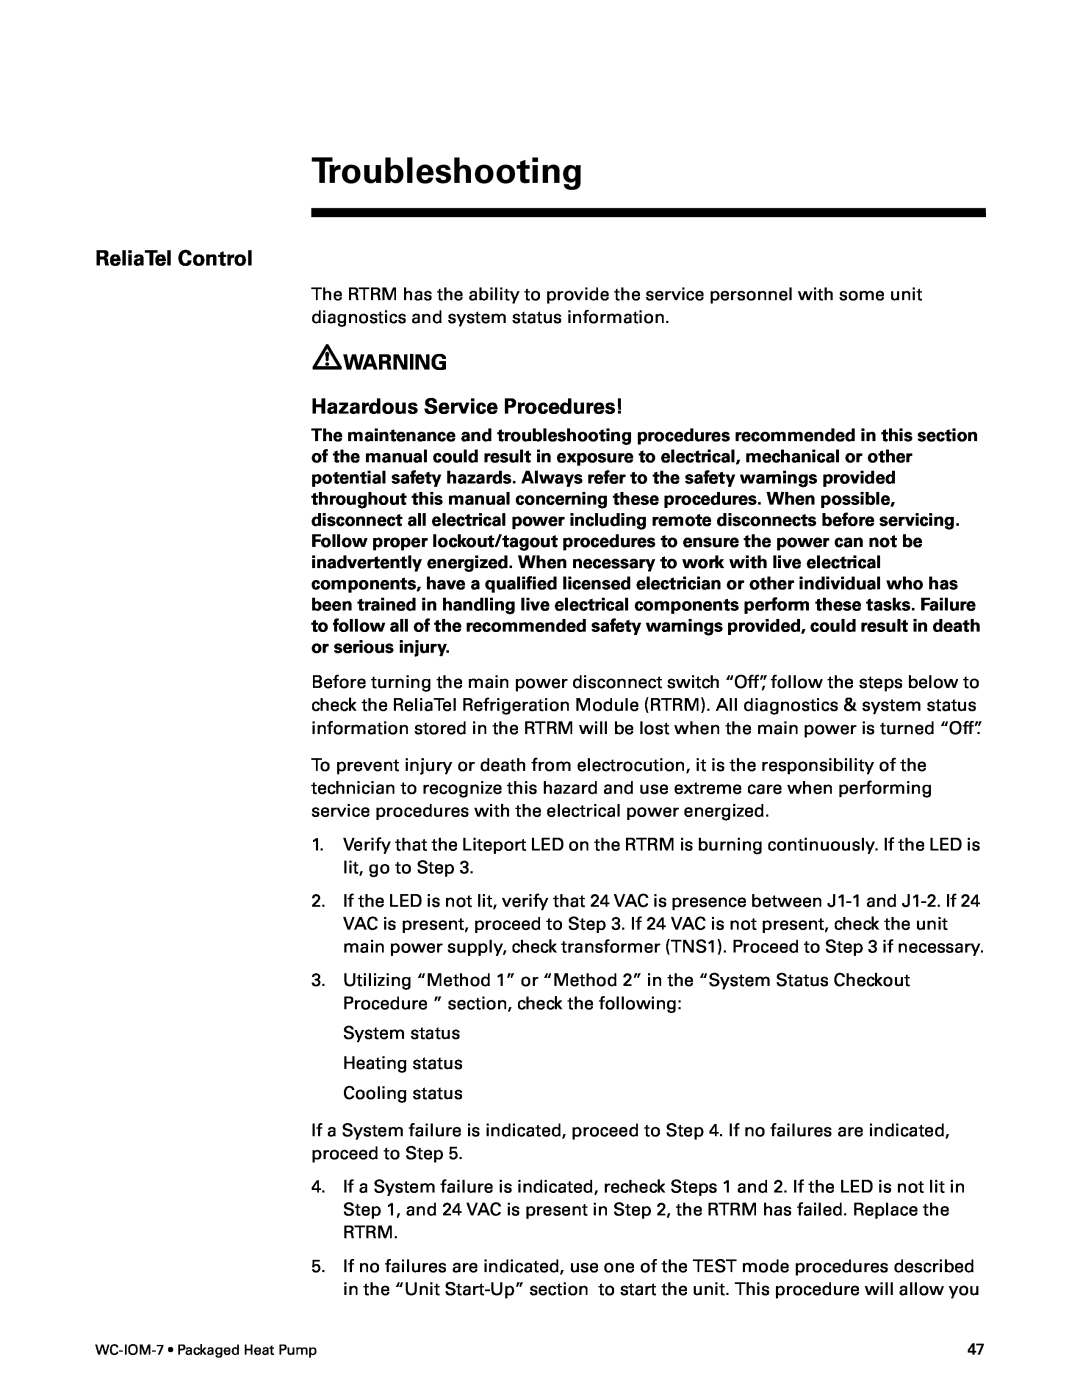 Trane WC-IOM-7 manual Troubleshooting, ReliaTel Control, Hazardous Service Procedures 